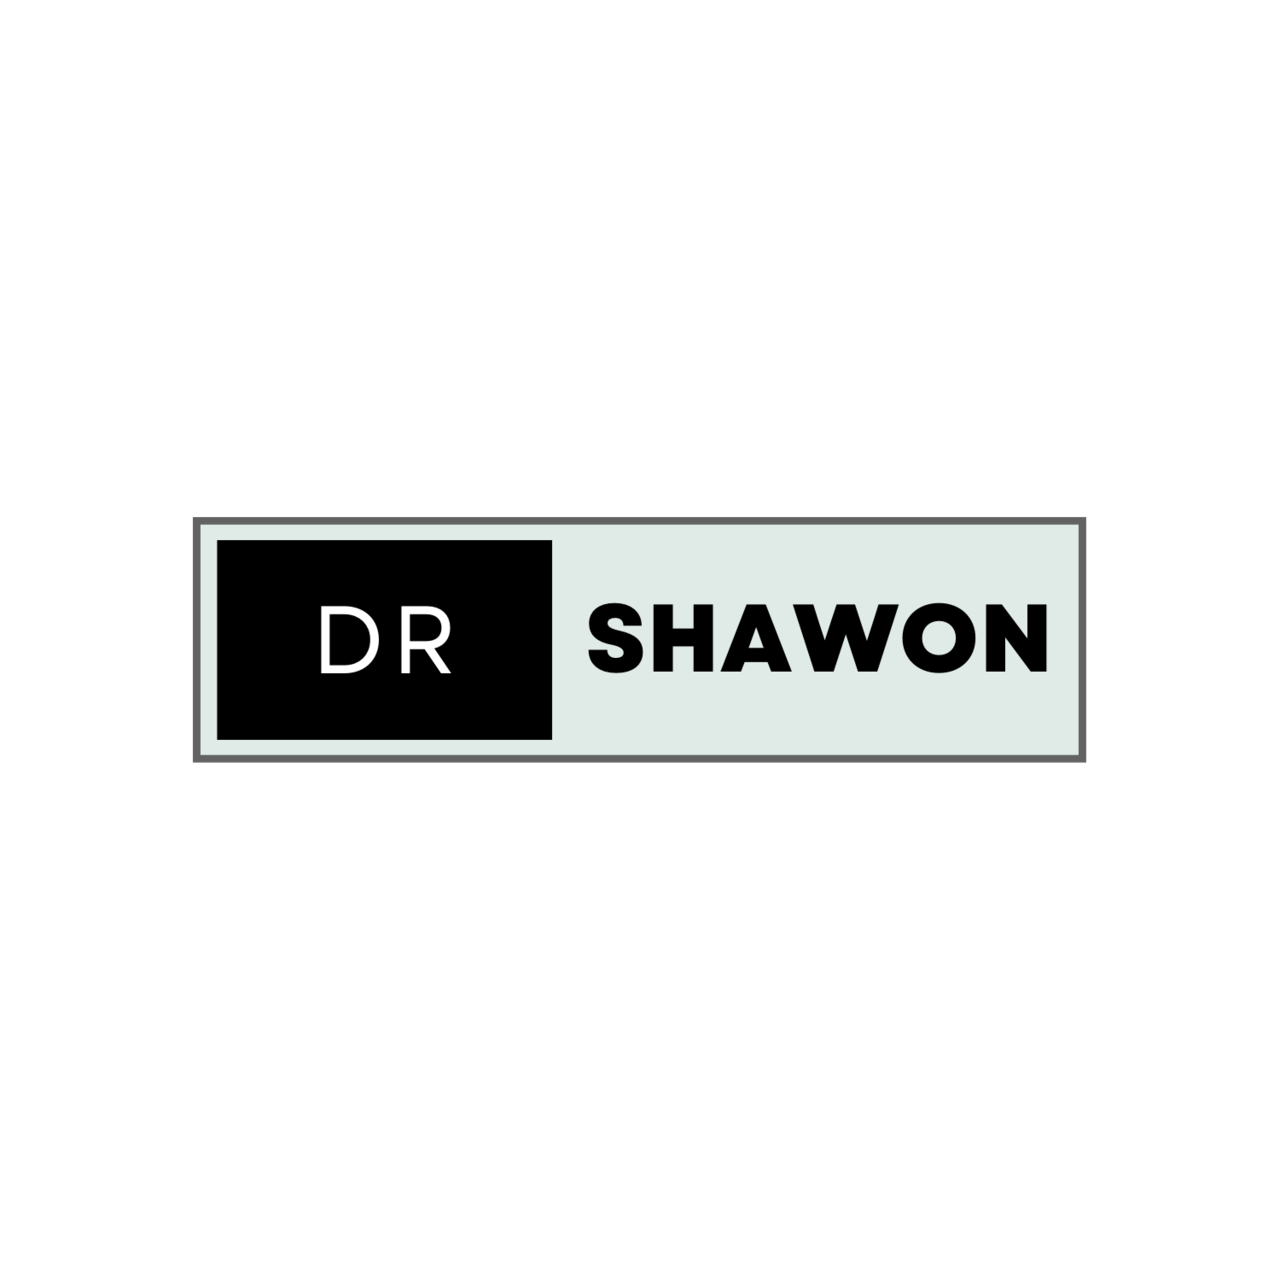 Dr Shawon's Newsletter